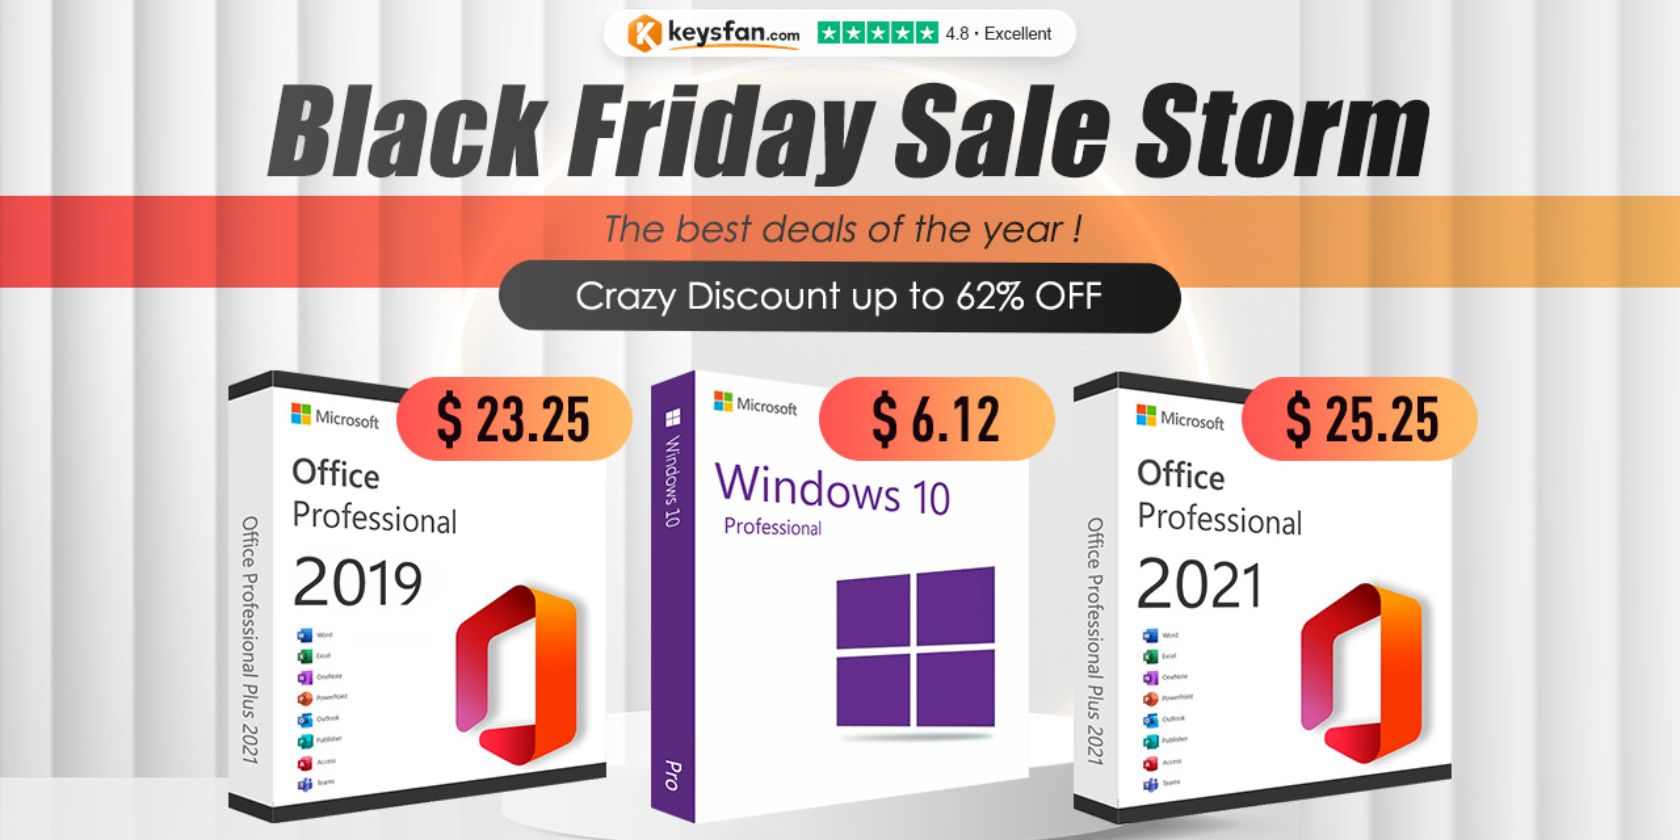 Keysfan Annual Lowest Price on Black Friday! Lifetime Windows 10 Starts from $6.12